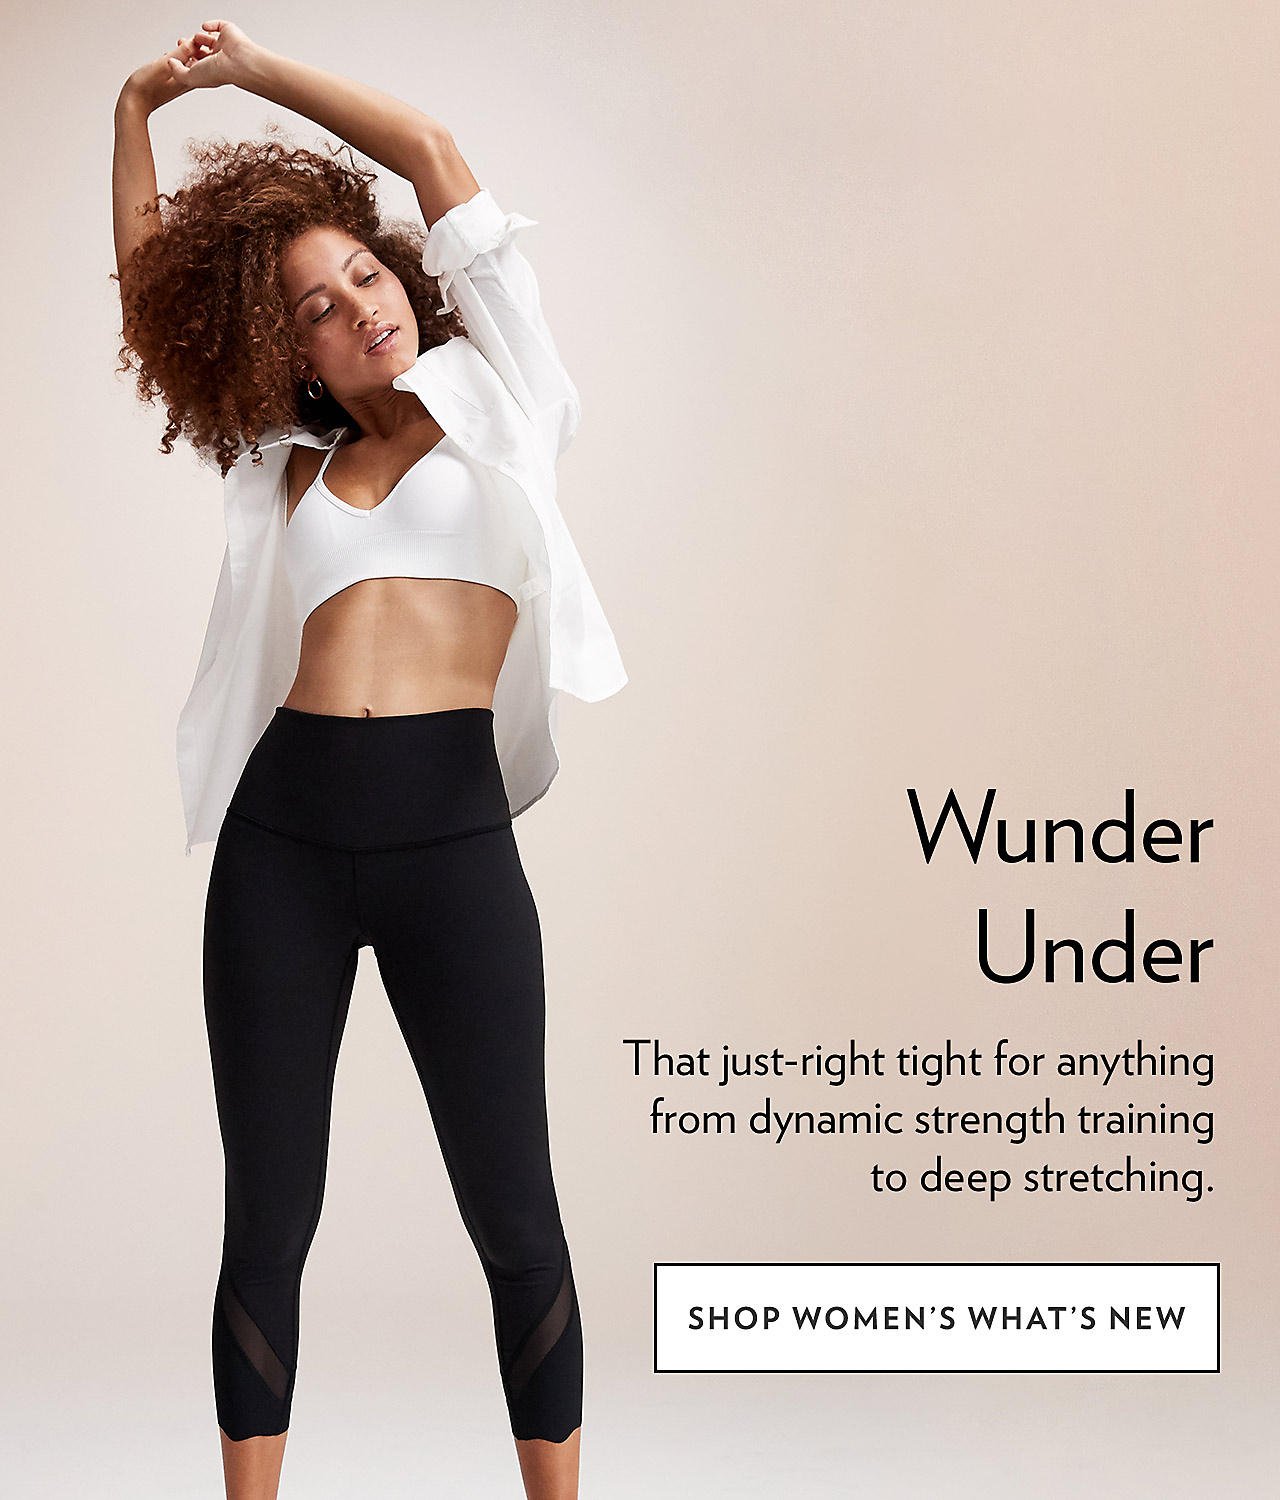 Wunder Under - SHOP WOMEN'S WHAT'S NEW